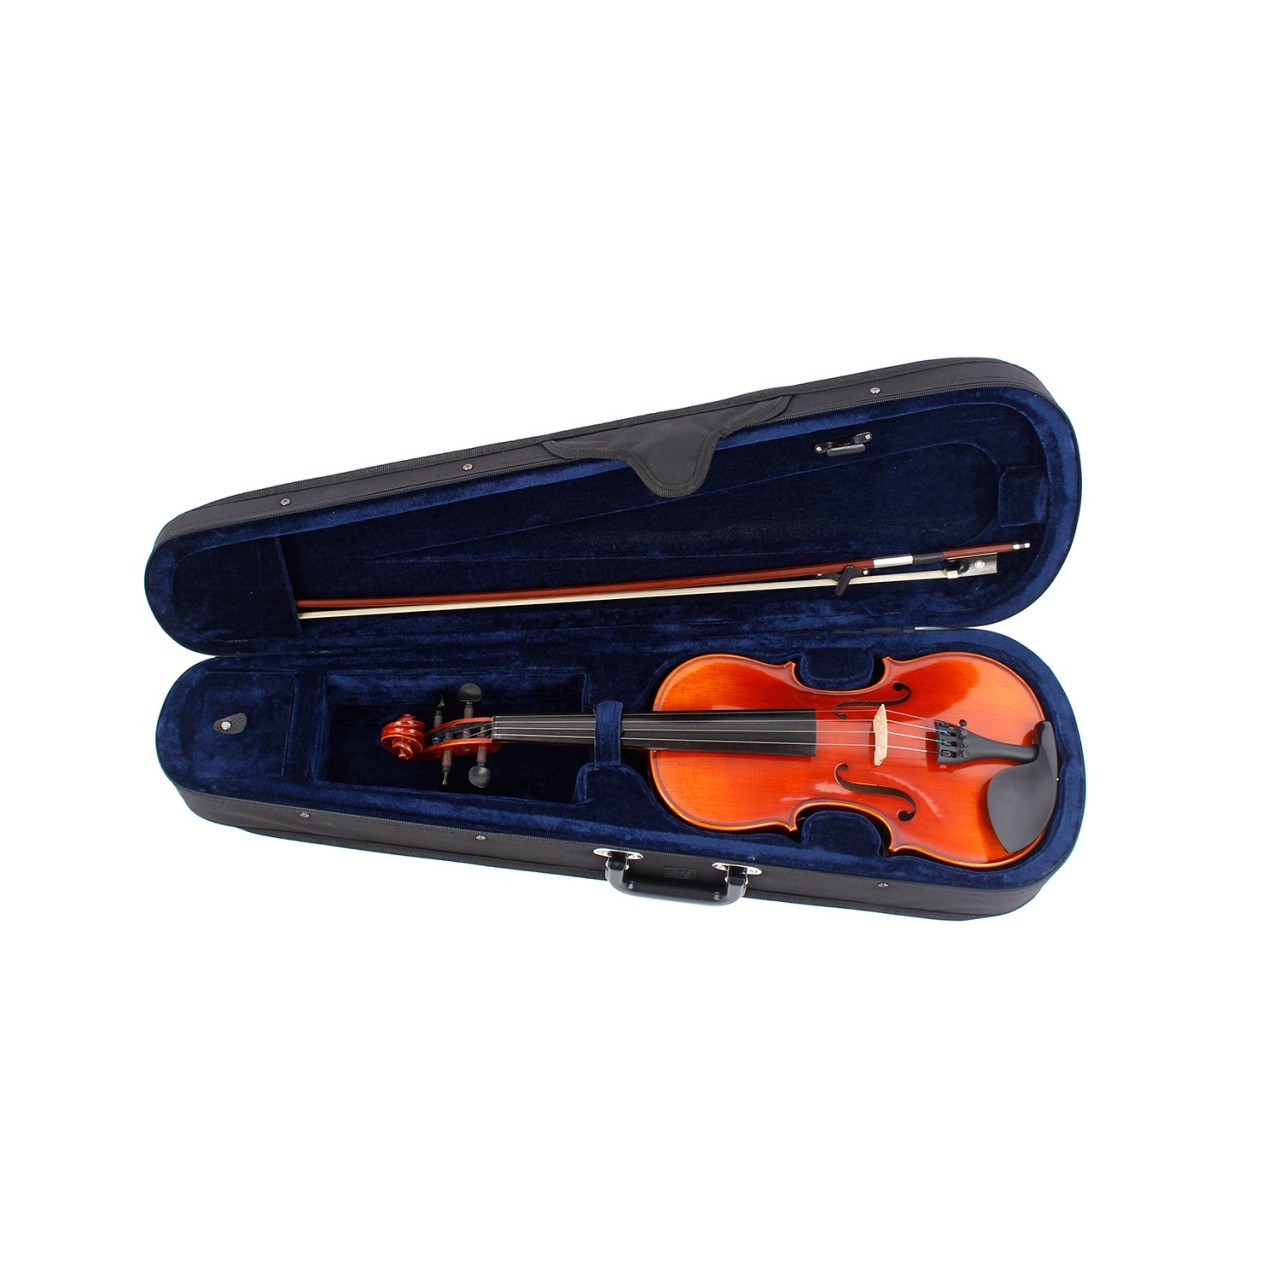 Höfner Violingarnitur AS-180 4/4